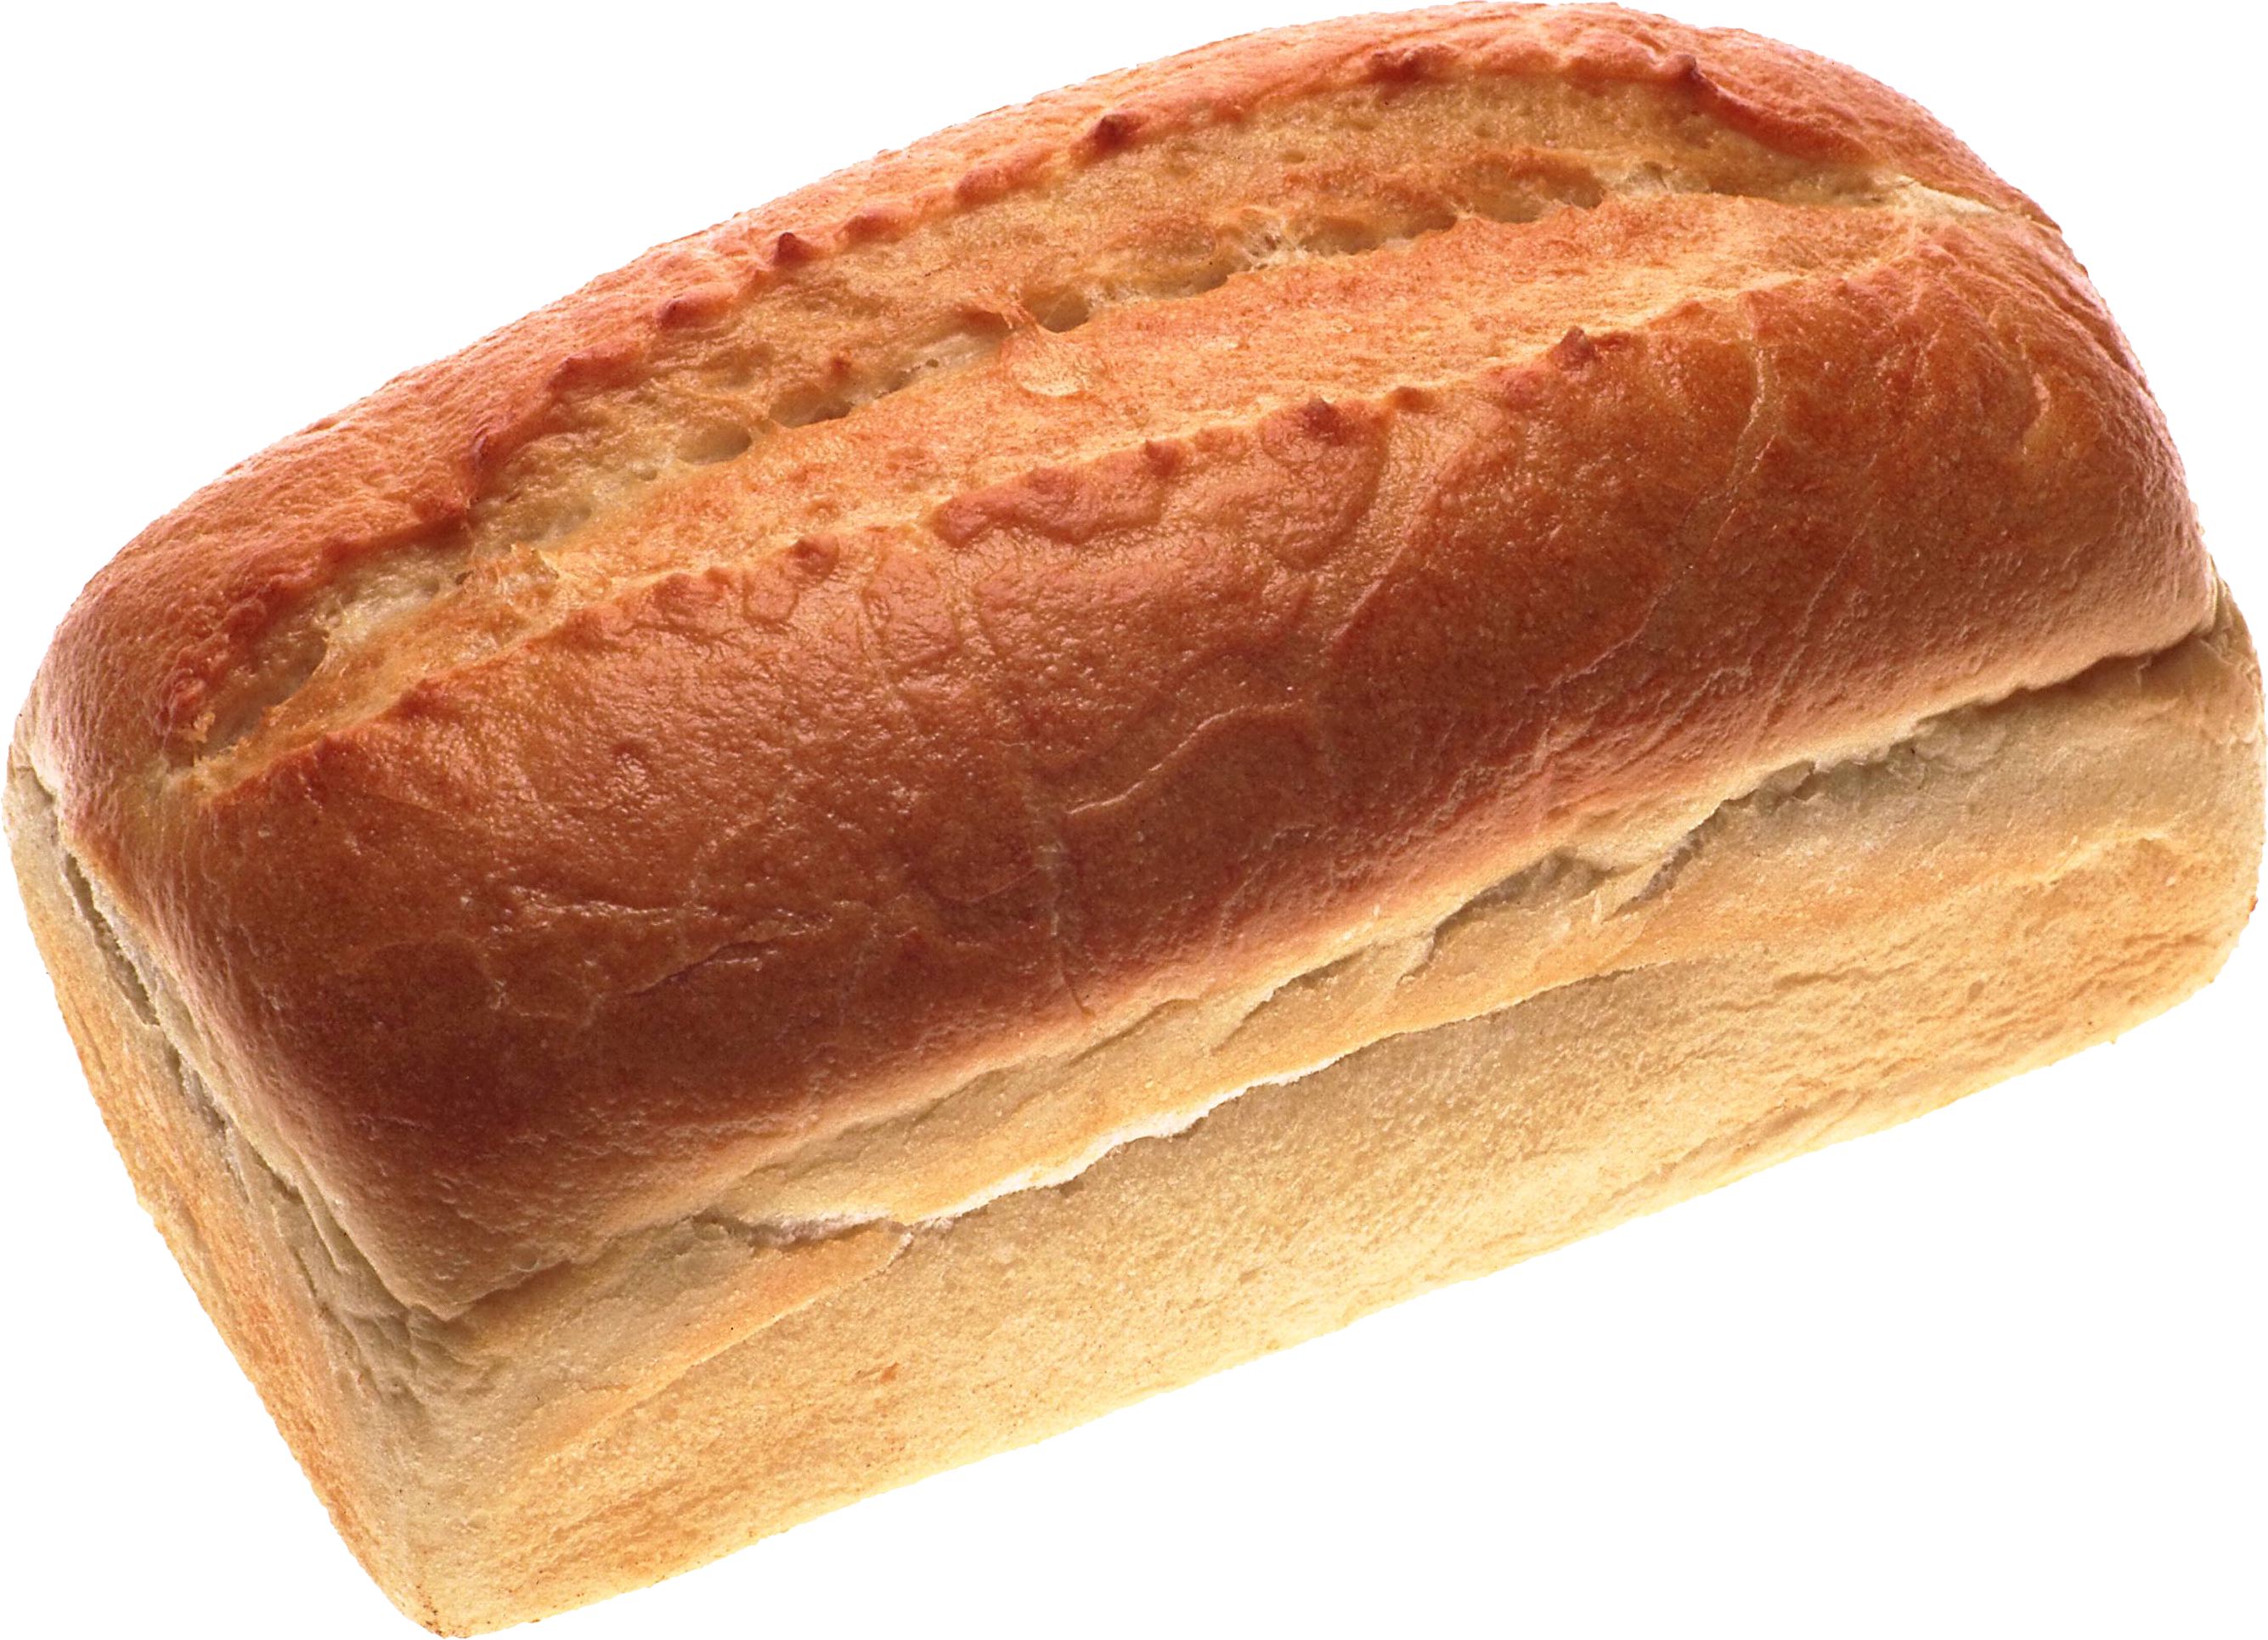 Bread Png Image   Bread Png   Bread Hd Png - Bread Images, Transparent background PNG HD thumbnail